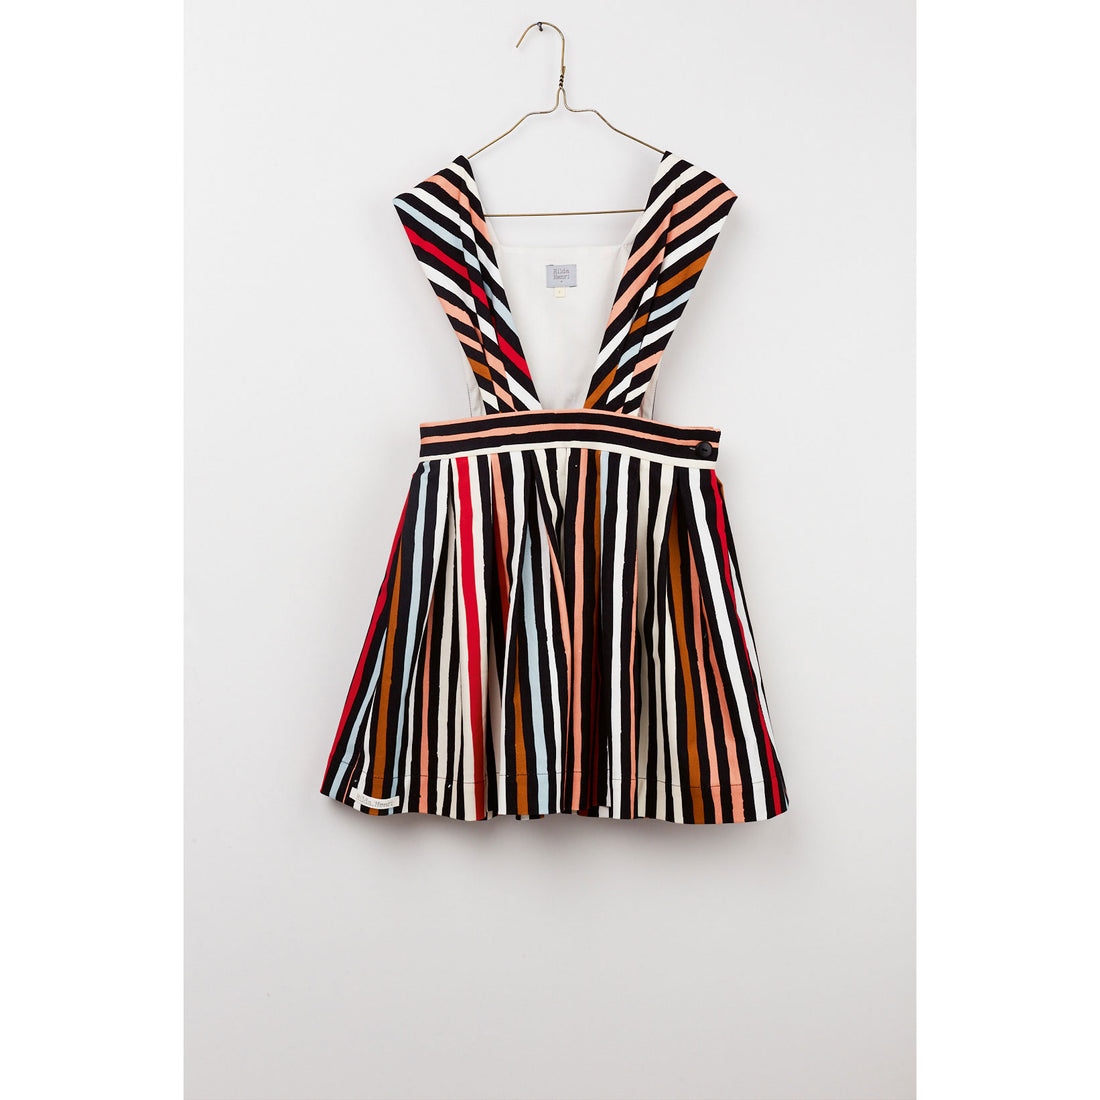 Hilda.Henri Stripes Pinafore Dress